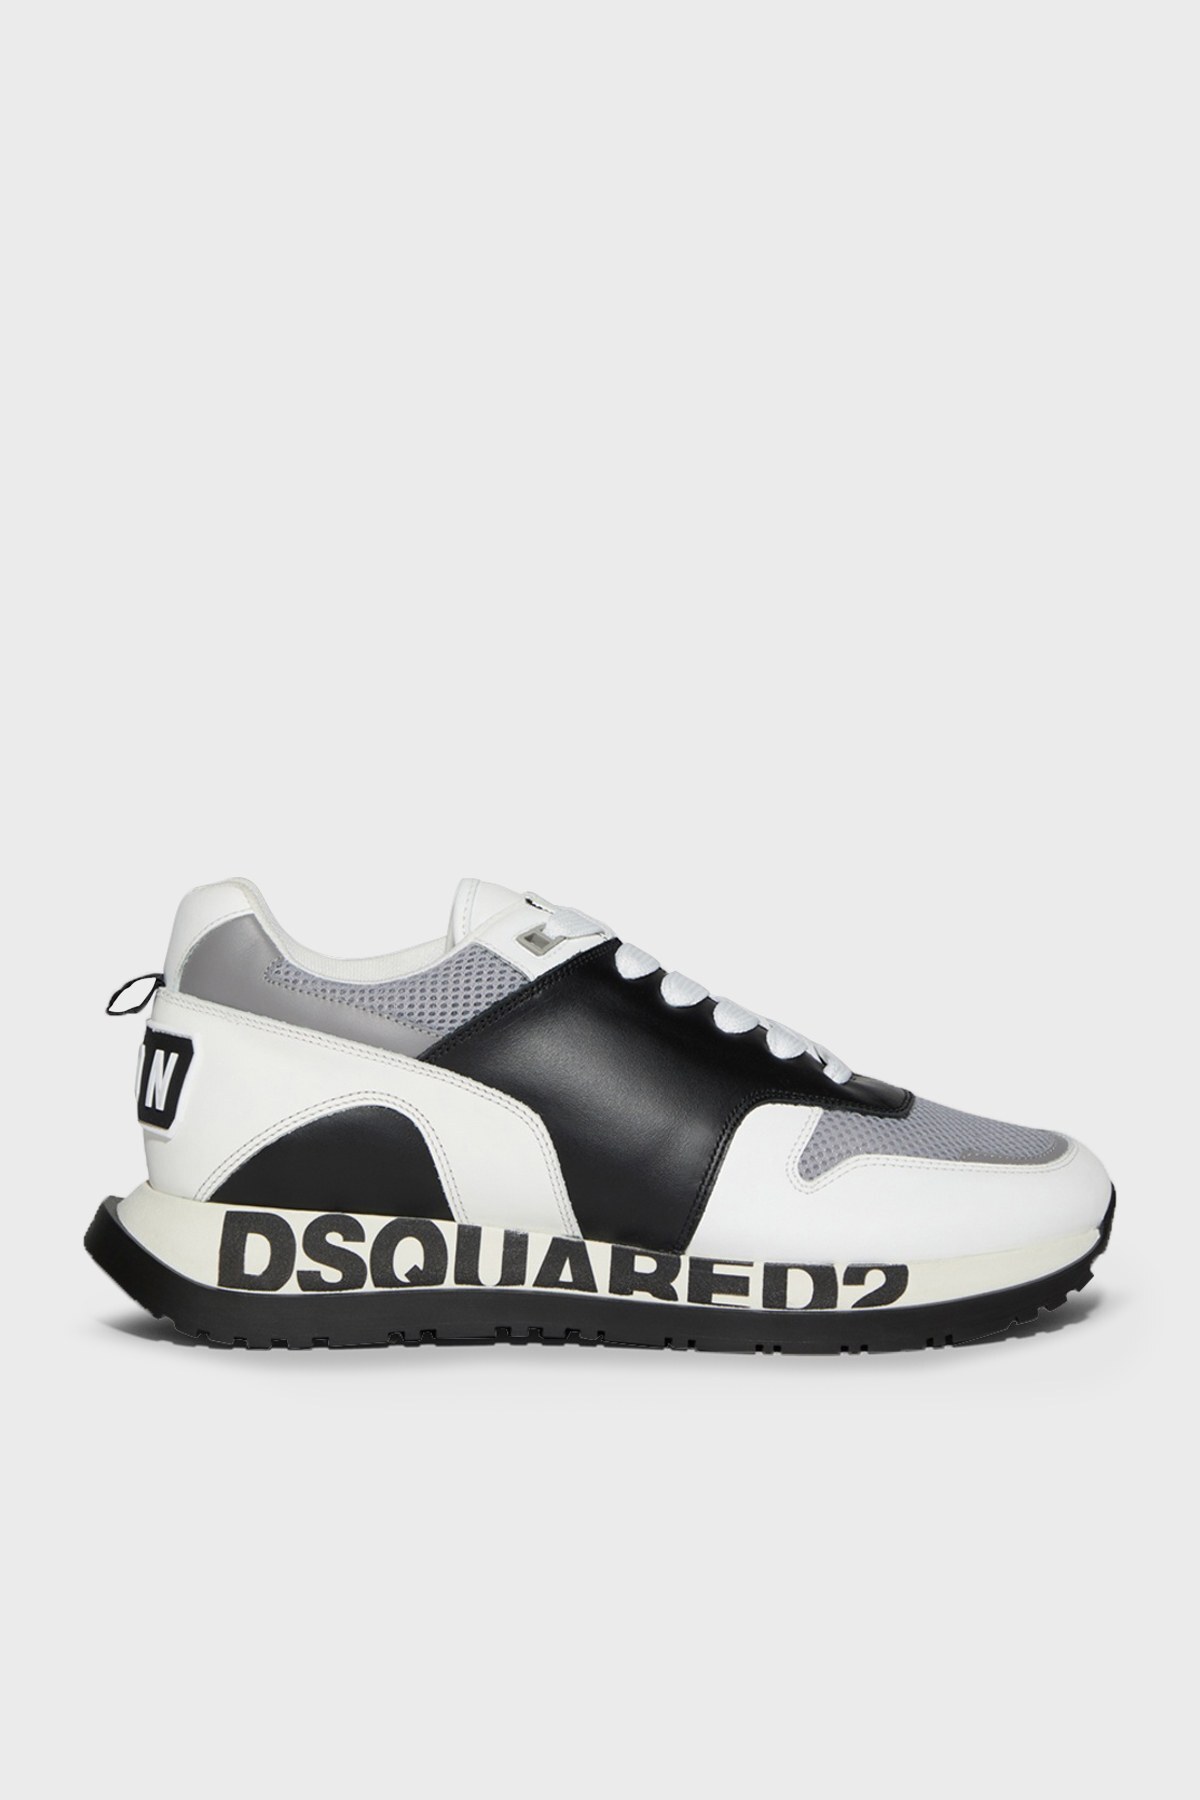 Dsquared2 Logolu Deri Sneaker Erkek Ayakkabı SNM021301 503280 M063 SİYAH-BEYAZ